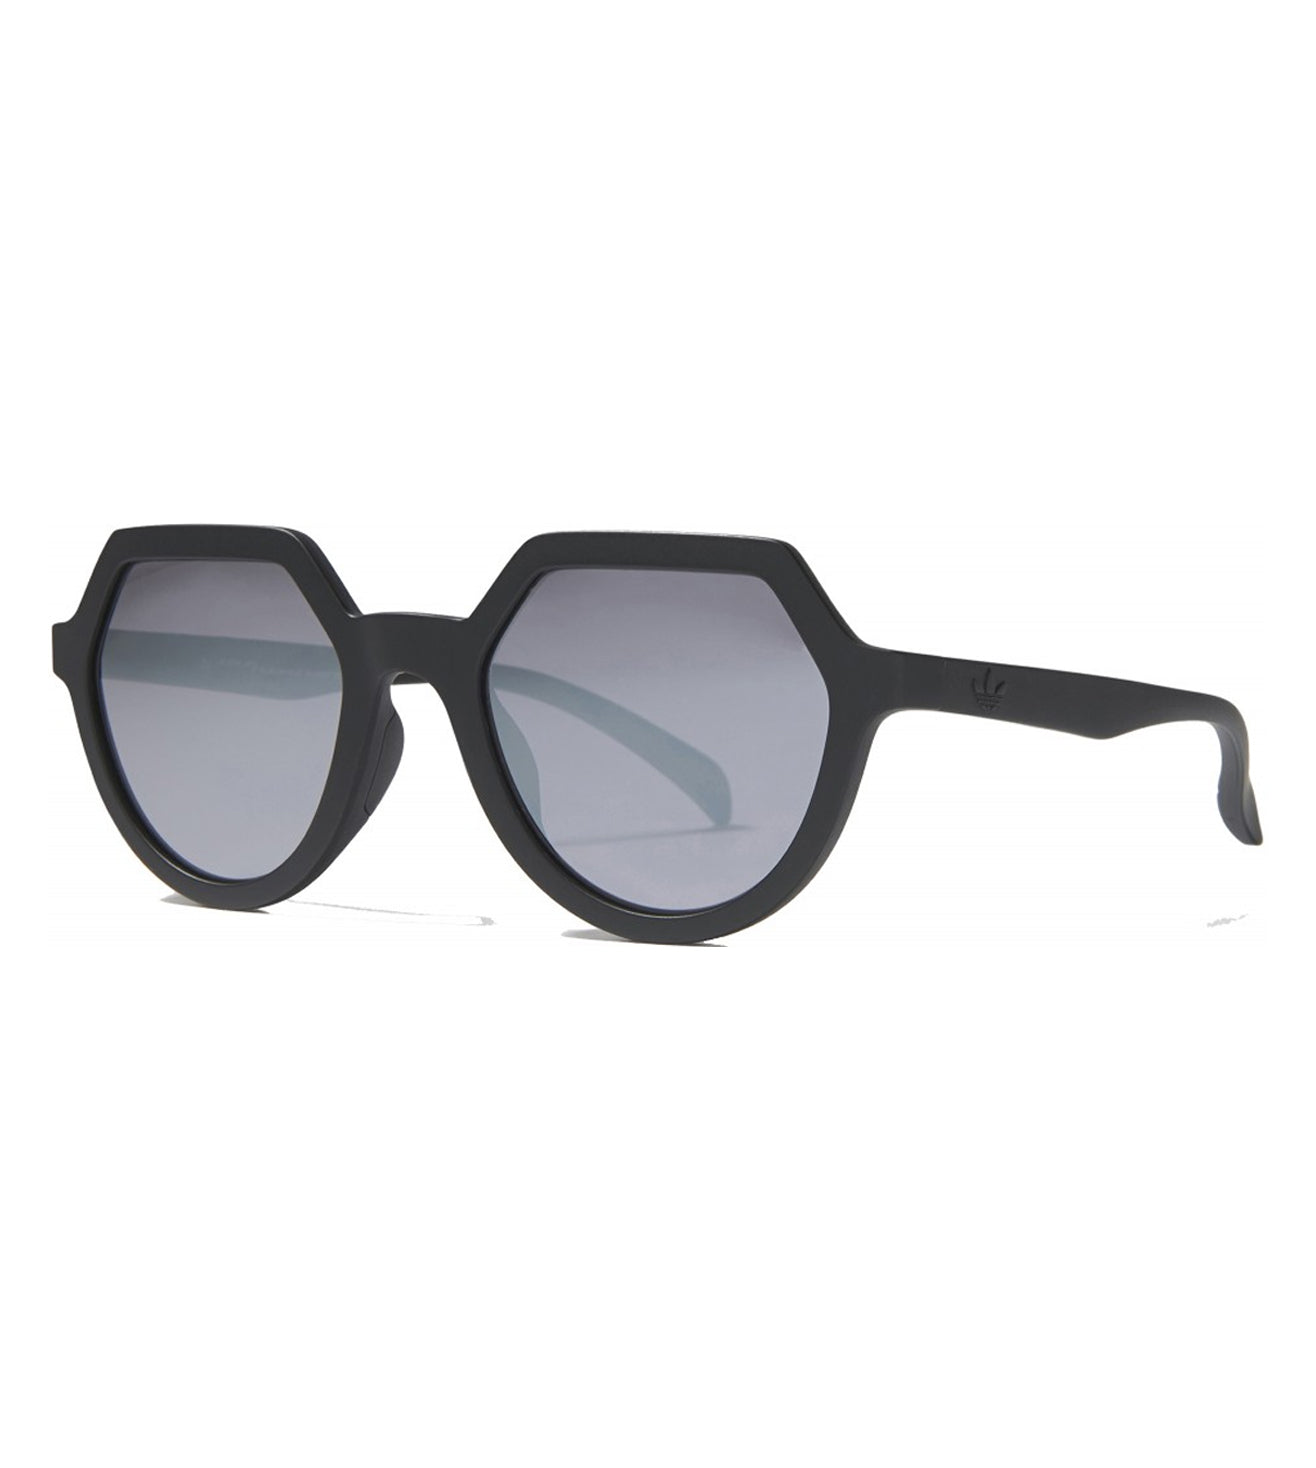 Adidas Originals Women's Grey Round Sunglasses